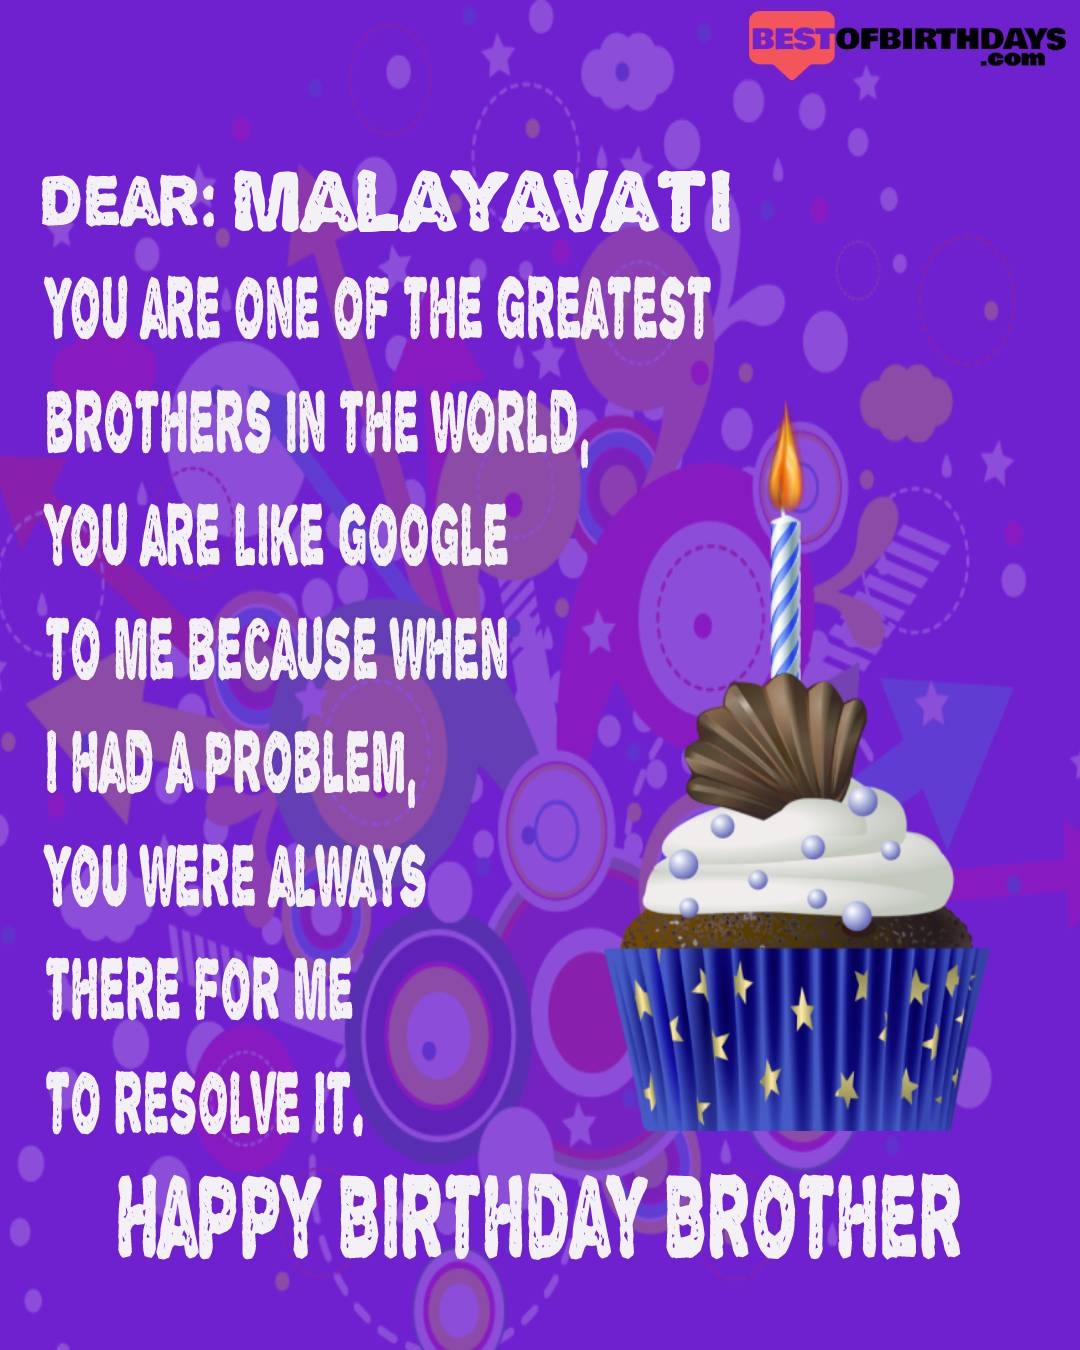 Happy birthday malayavati bhai brother bro